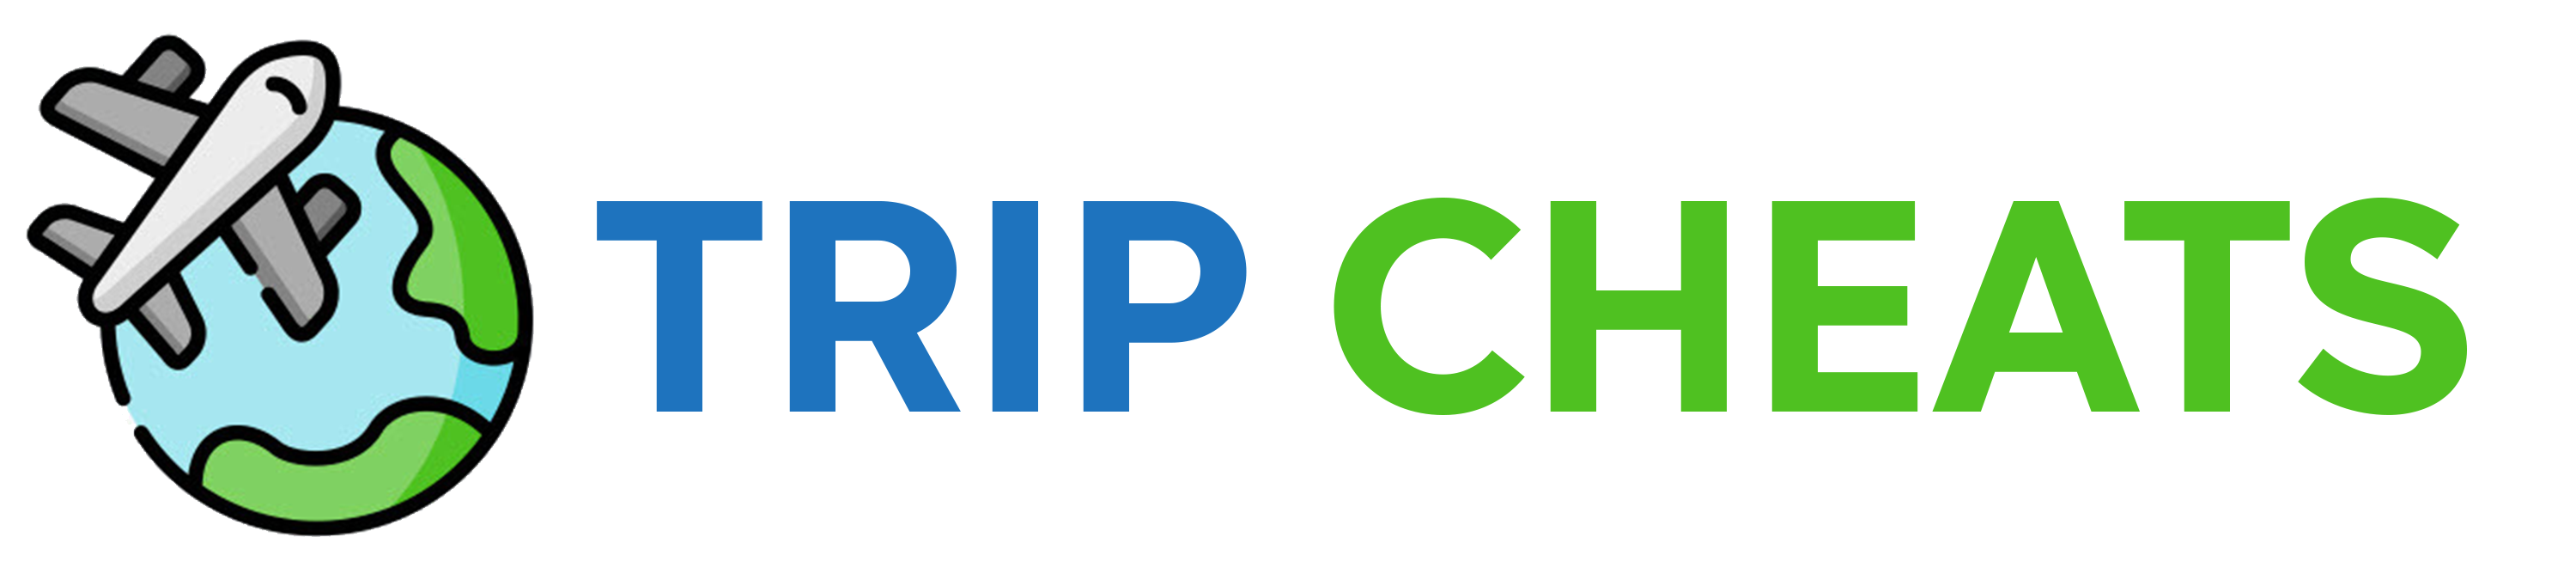 Trip Cheats Logo